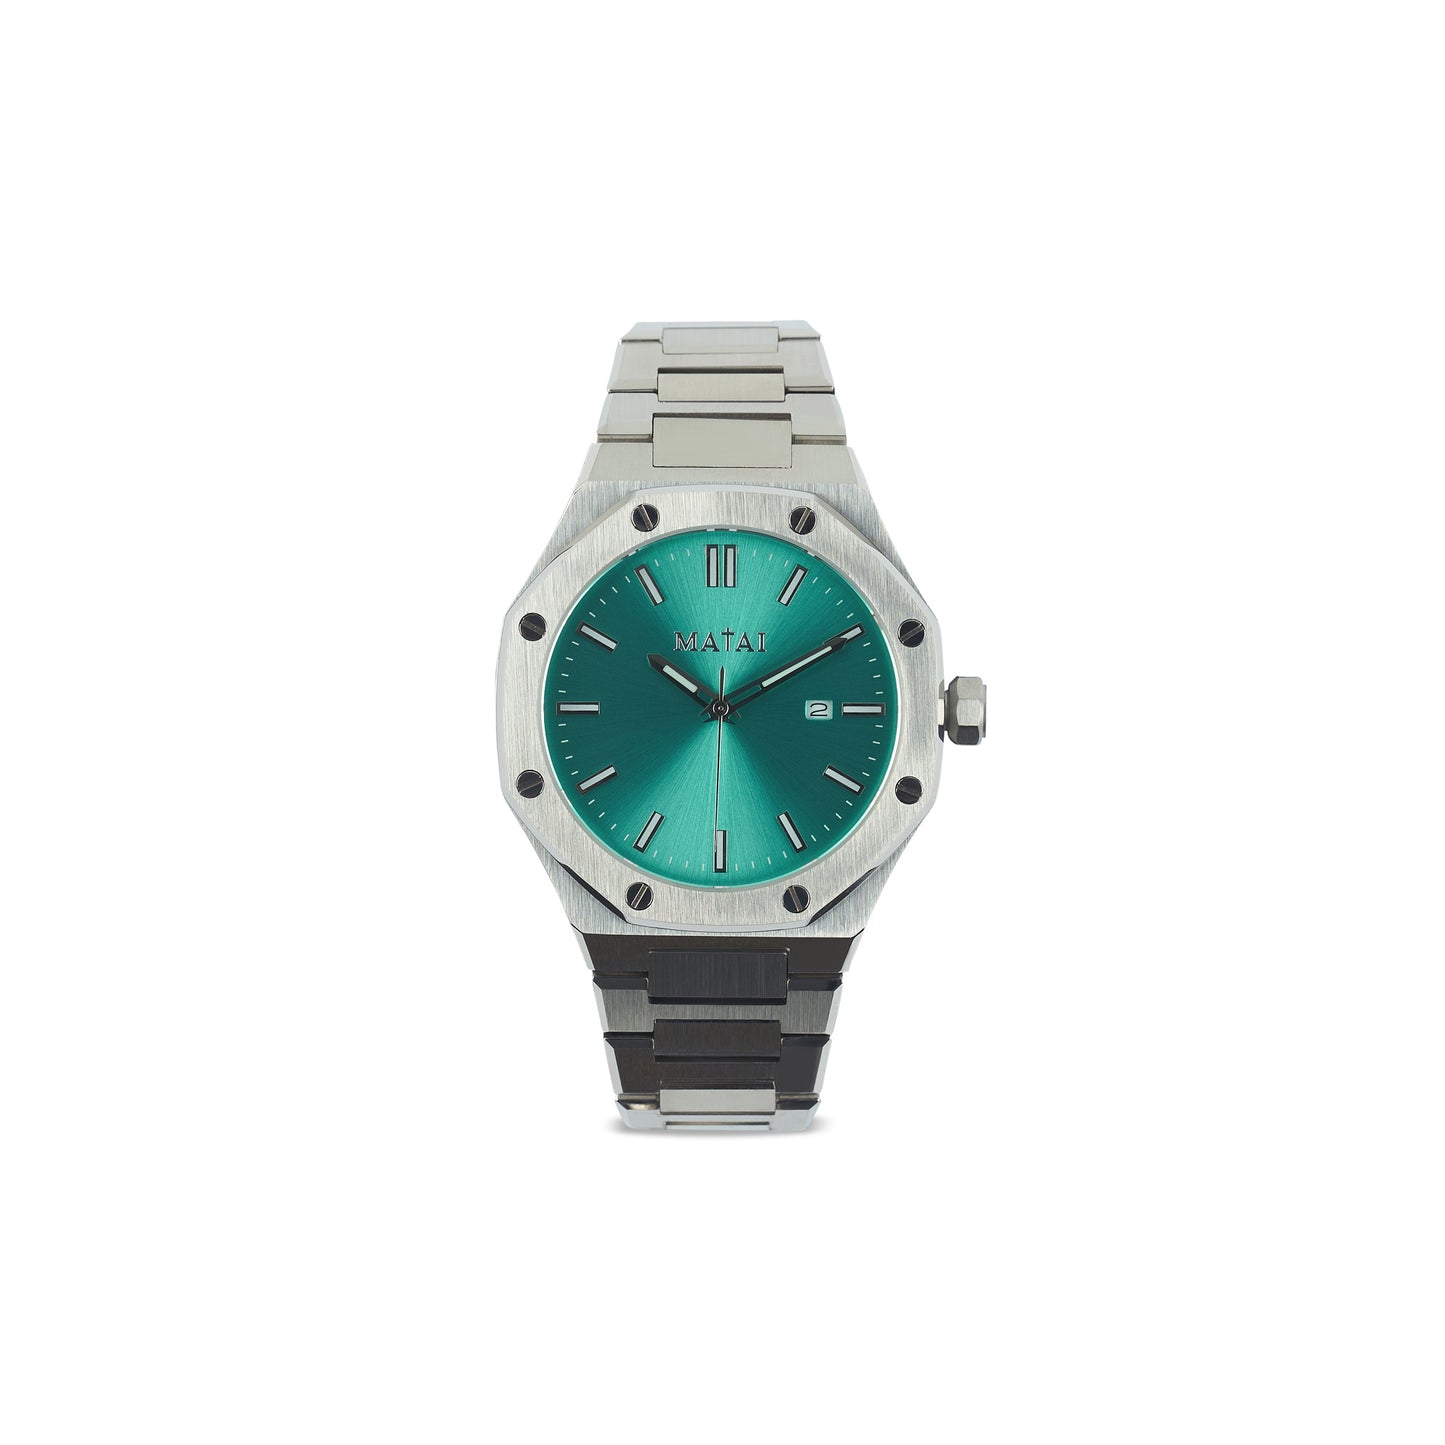 Matai - Iva Masina Collection Silver / Turquoise Watch